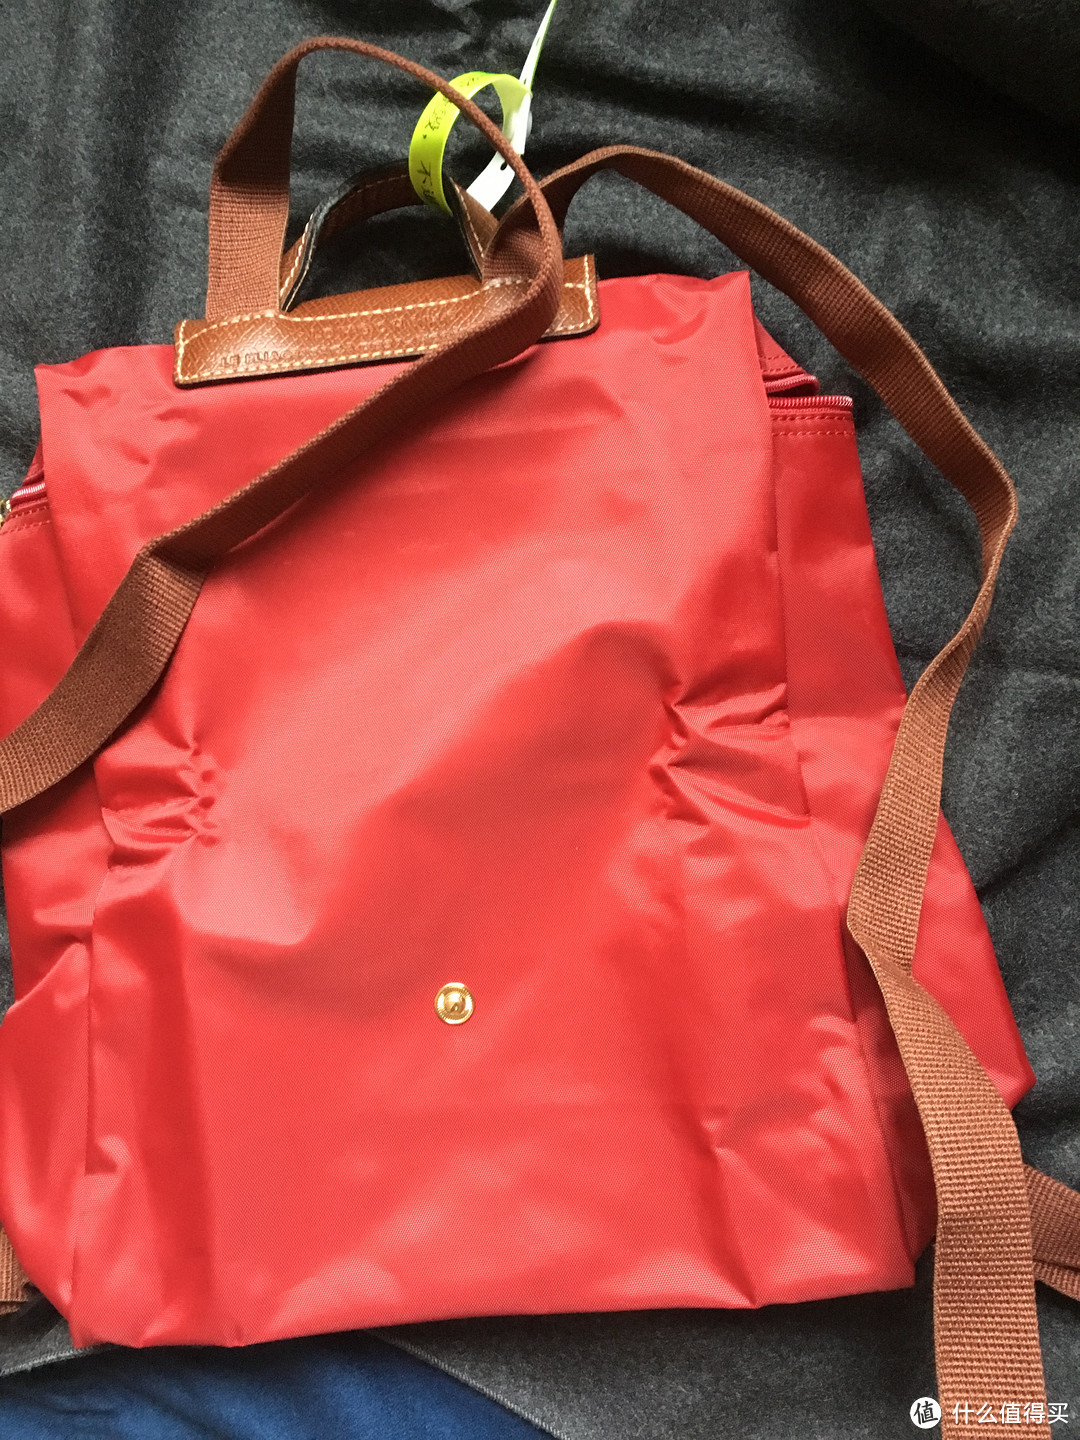 LONGCHAMP 珑骧 女款红色尼龙3D系列商务背包和丹姿水护肤品